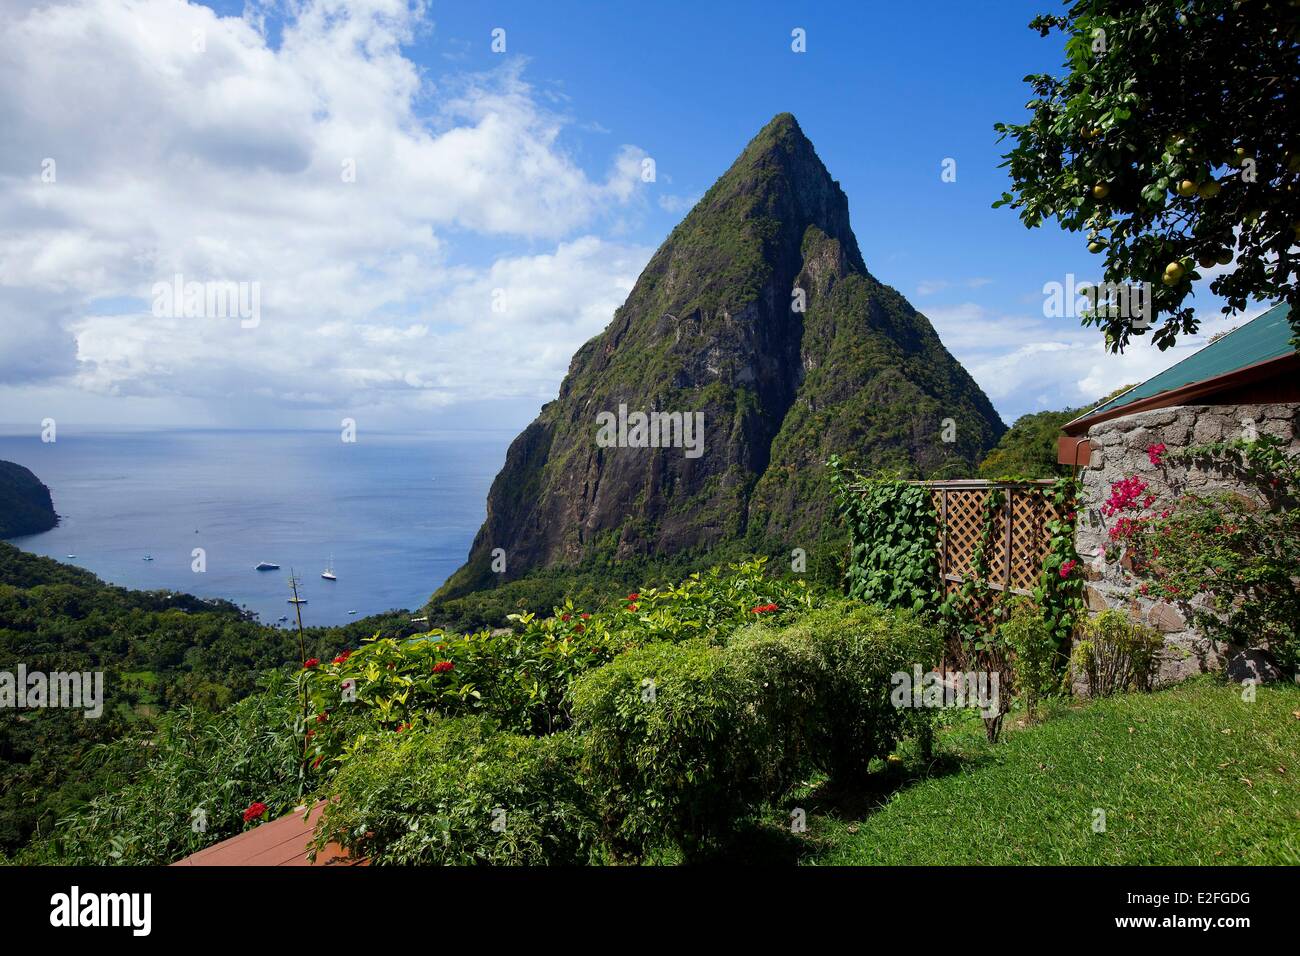 Indie occidentali Isole dei Caraibi del vento Saint Lucia West Island Soufriere District hotel Soufriere Ladera in background Foto Stock